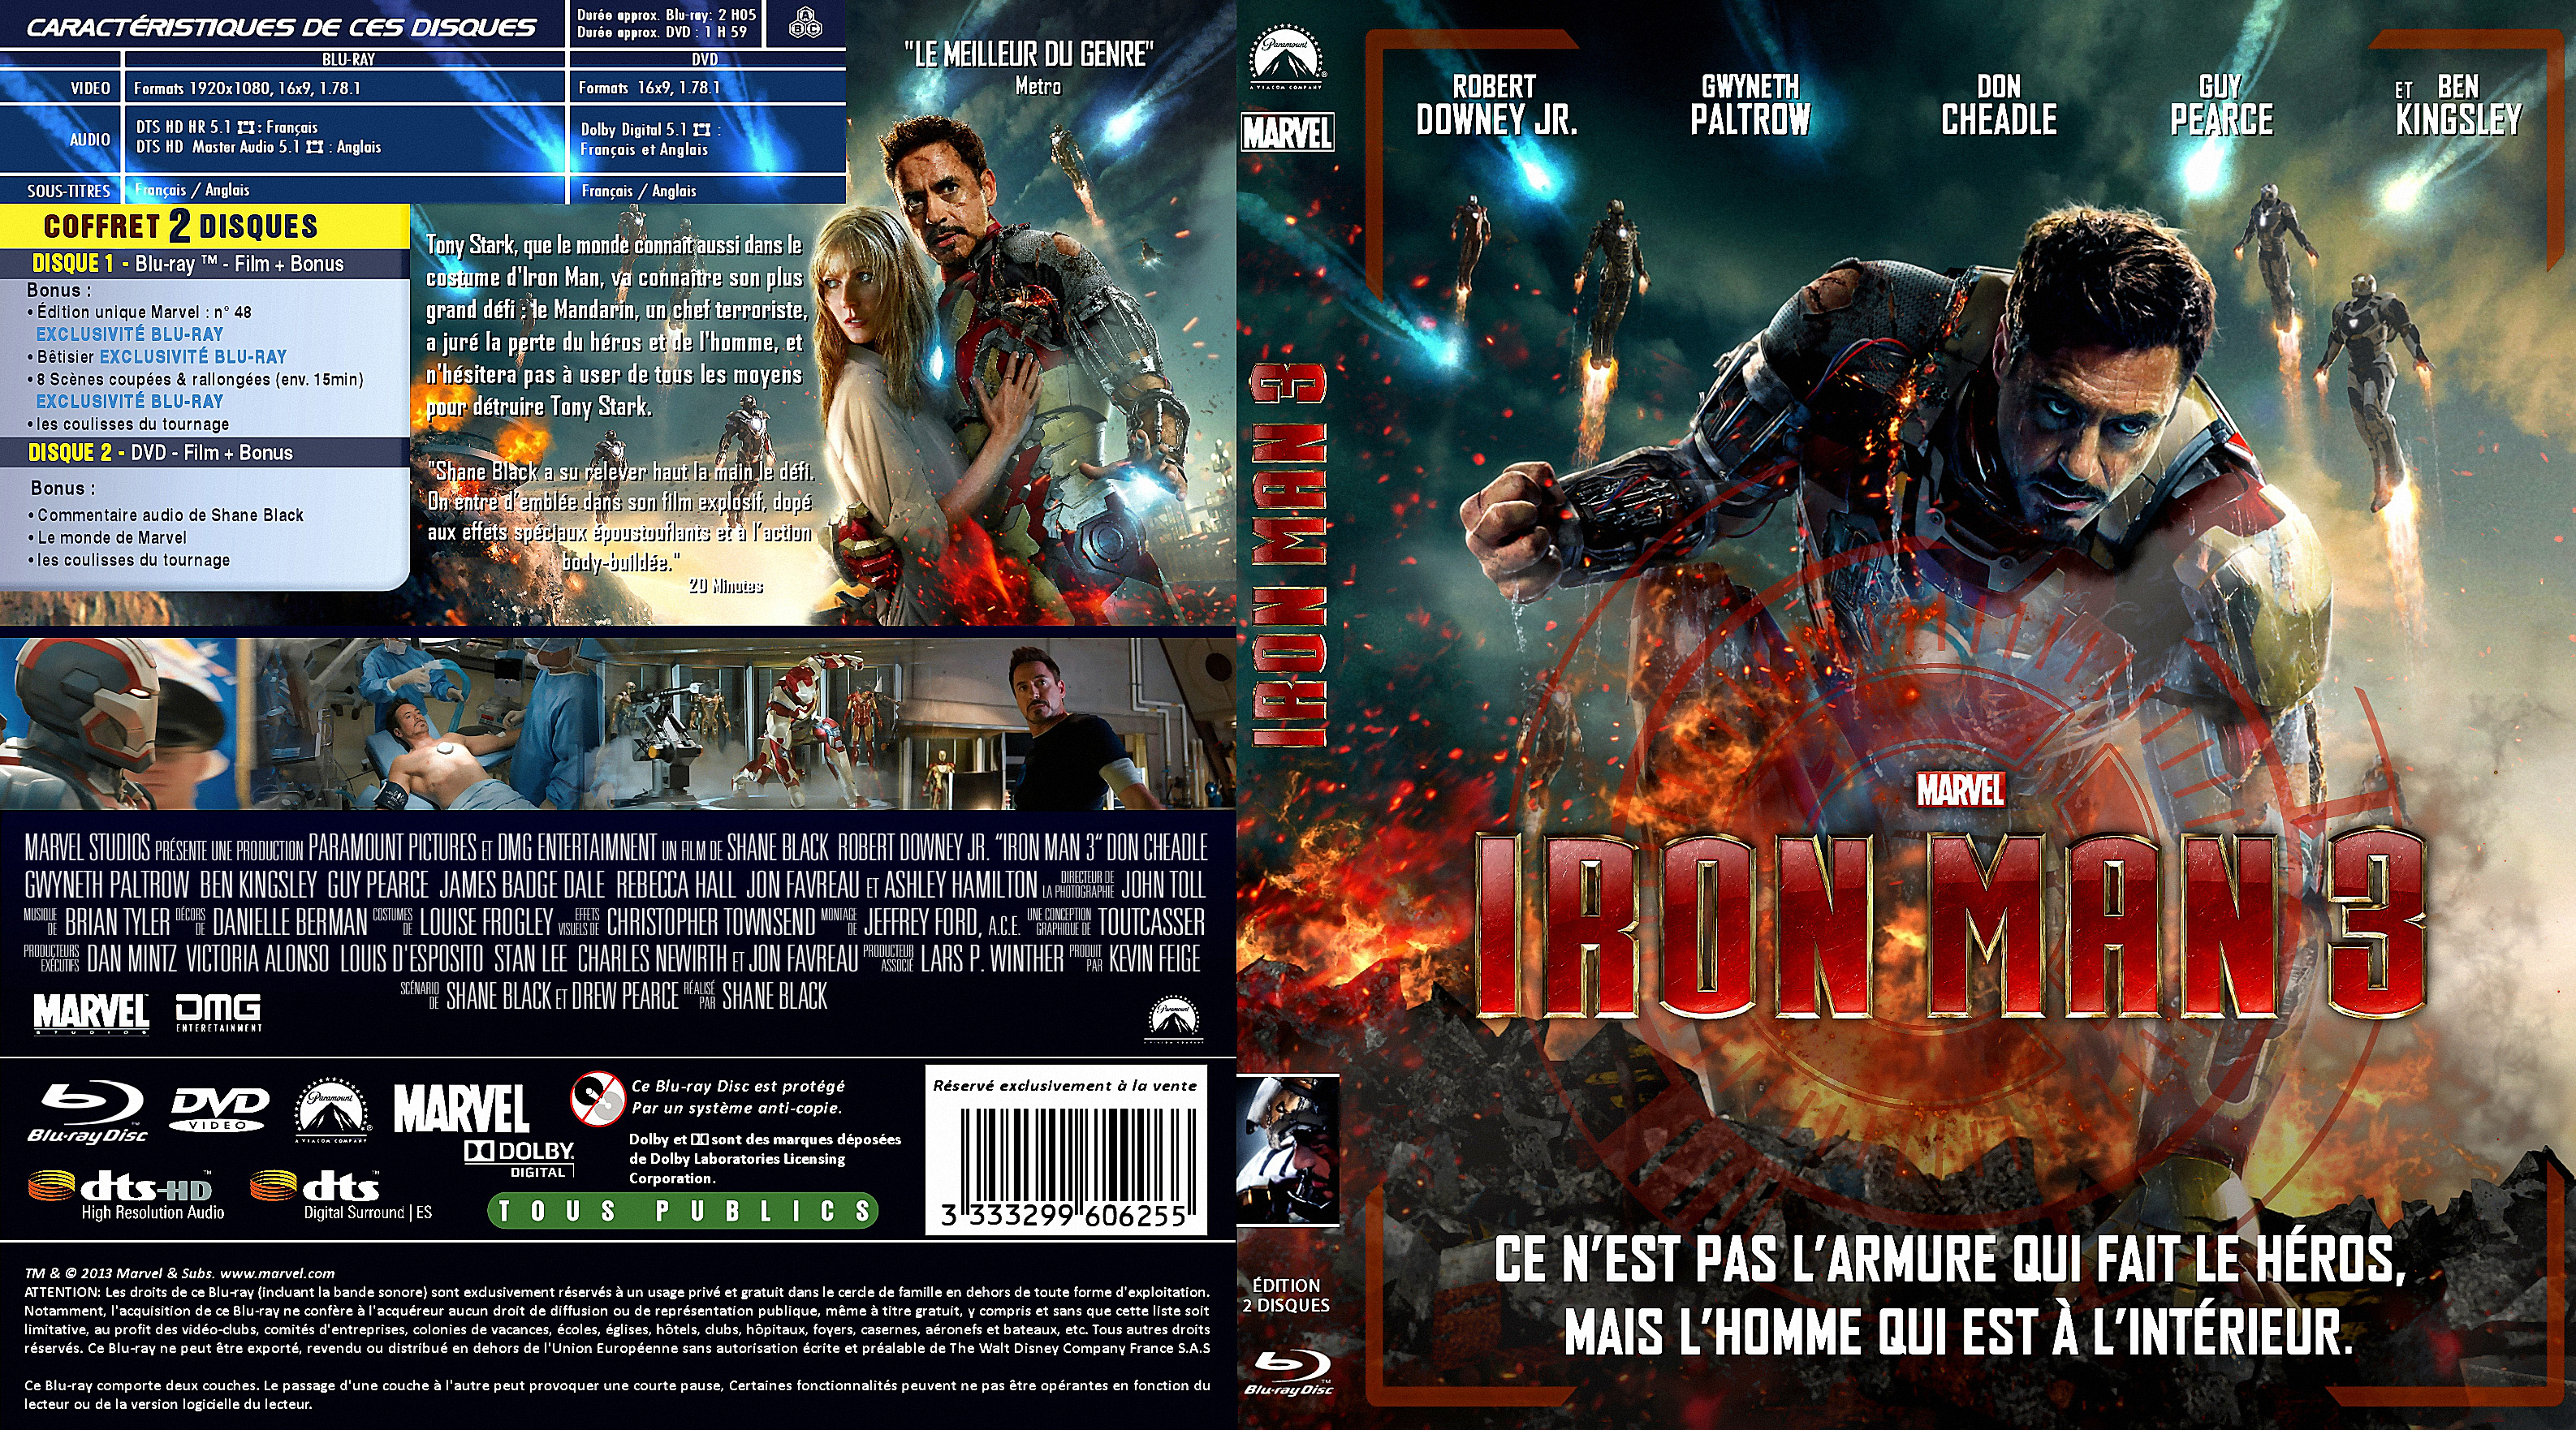 Jaquette DVD Iron man 3 custom (BLU-RAY) v2